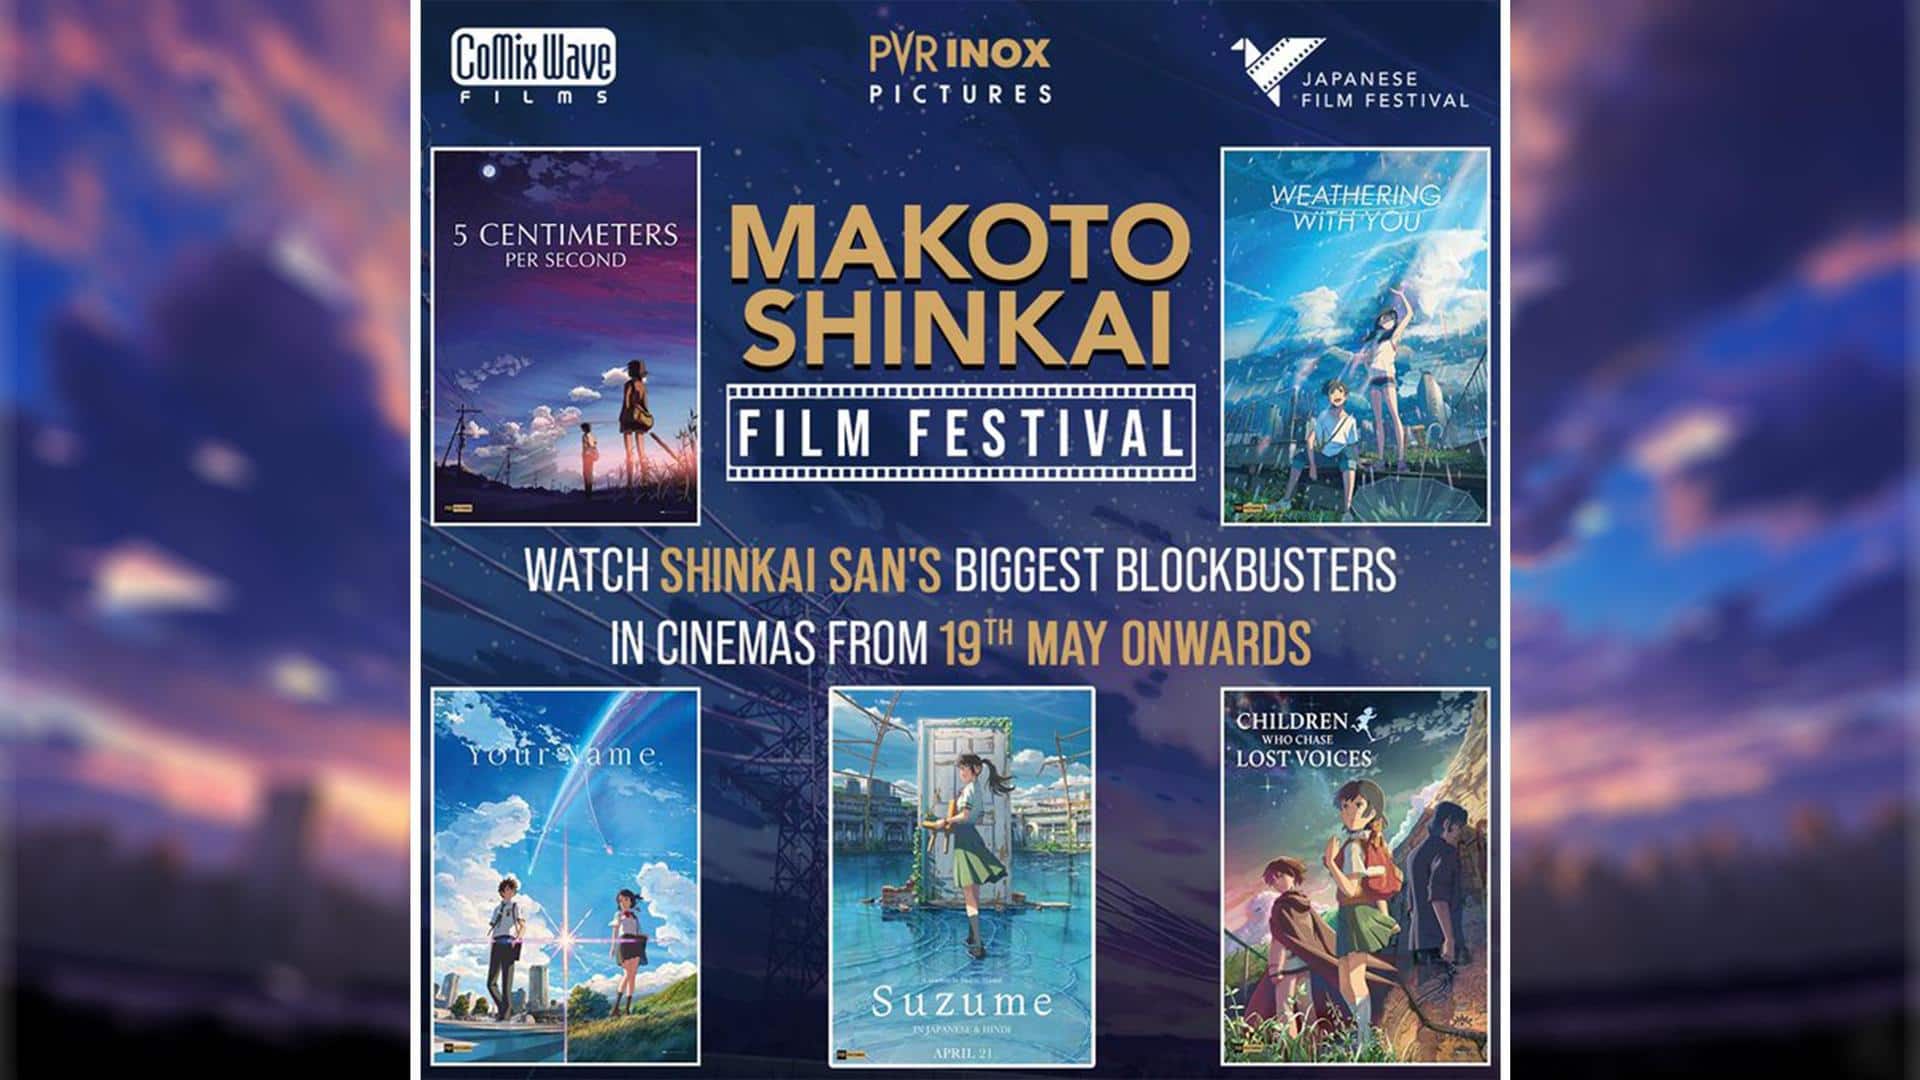 Makoto Shinkai movies screening in India soon: Everything to know